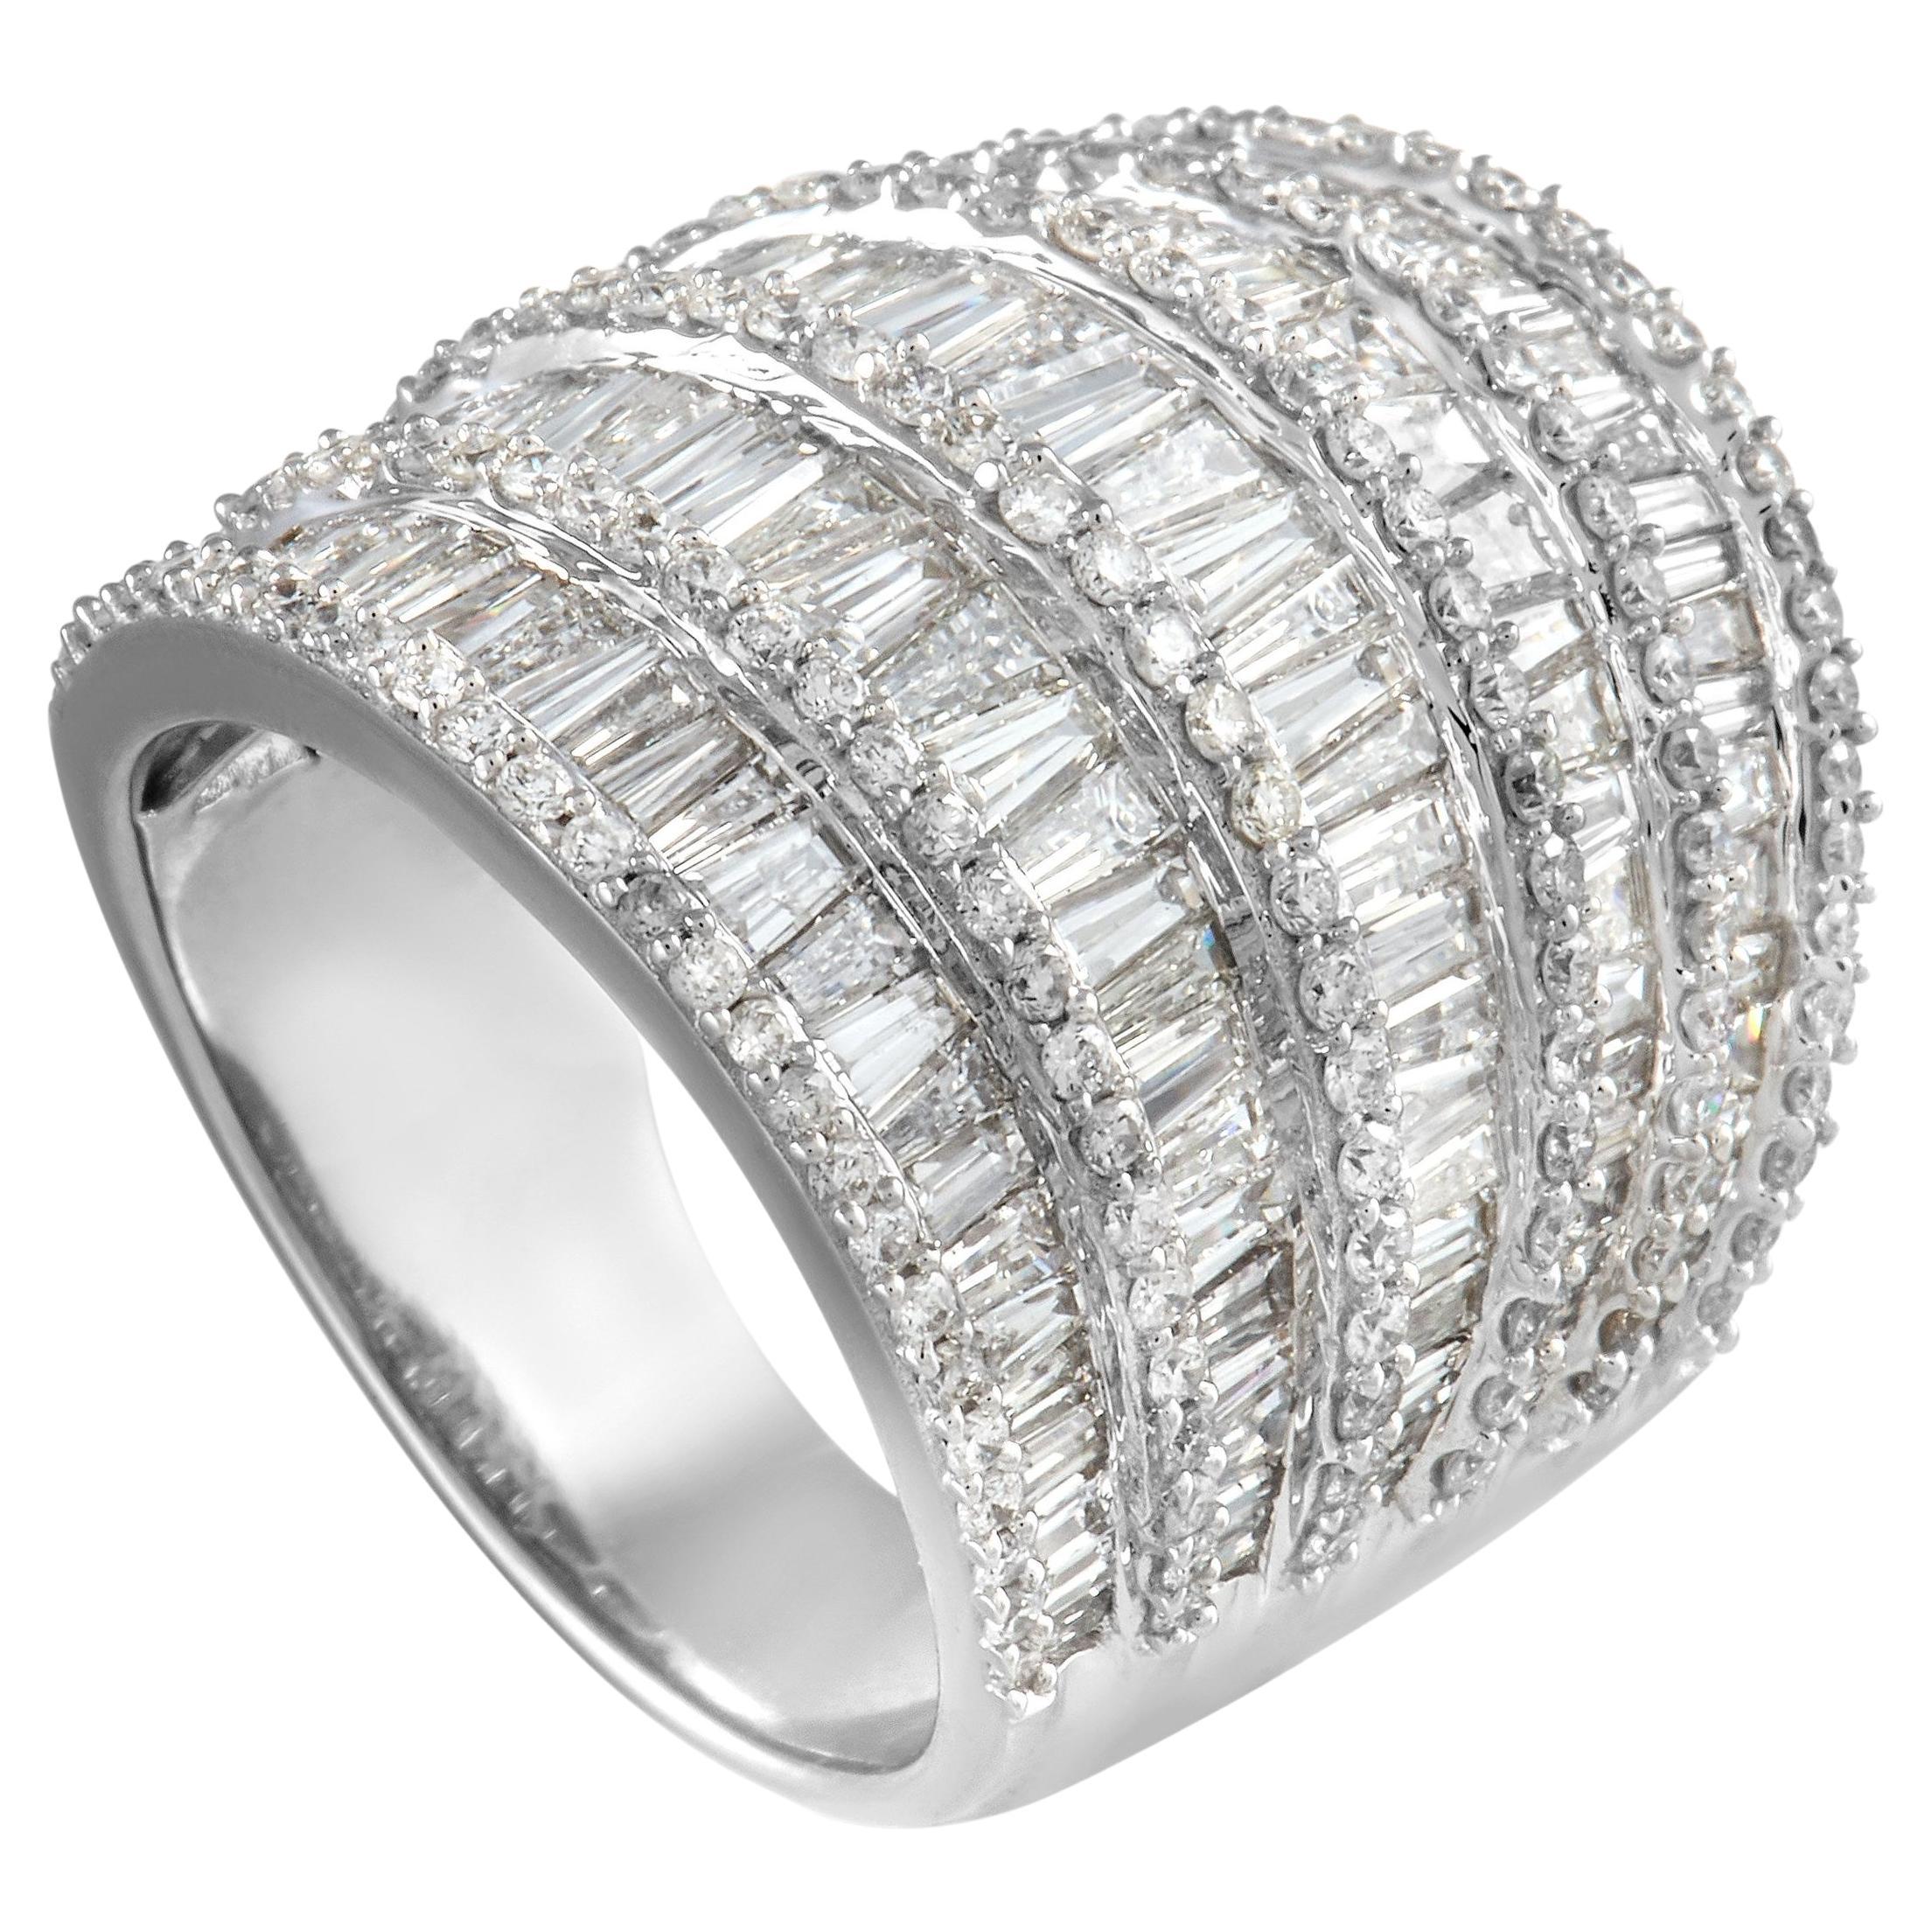 LB Exclusive 18K White Gold 4.75 Ct Diamond Ring